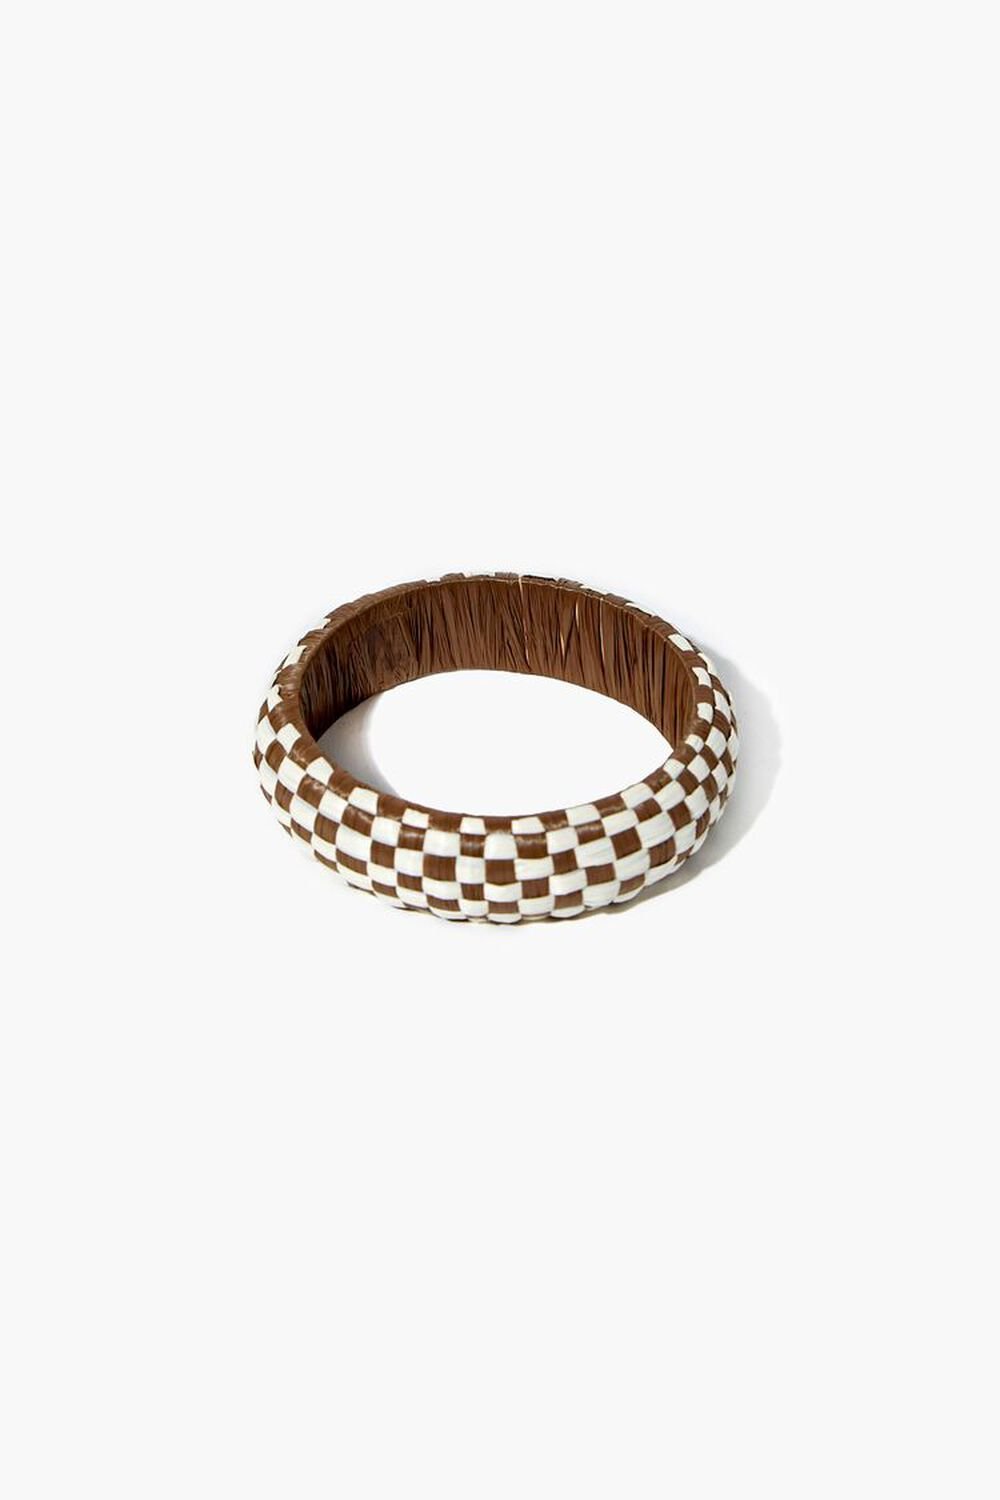 WHITE/BROWN Checkered Wooden Bangle Bracelet, image 1